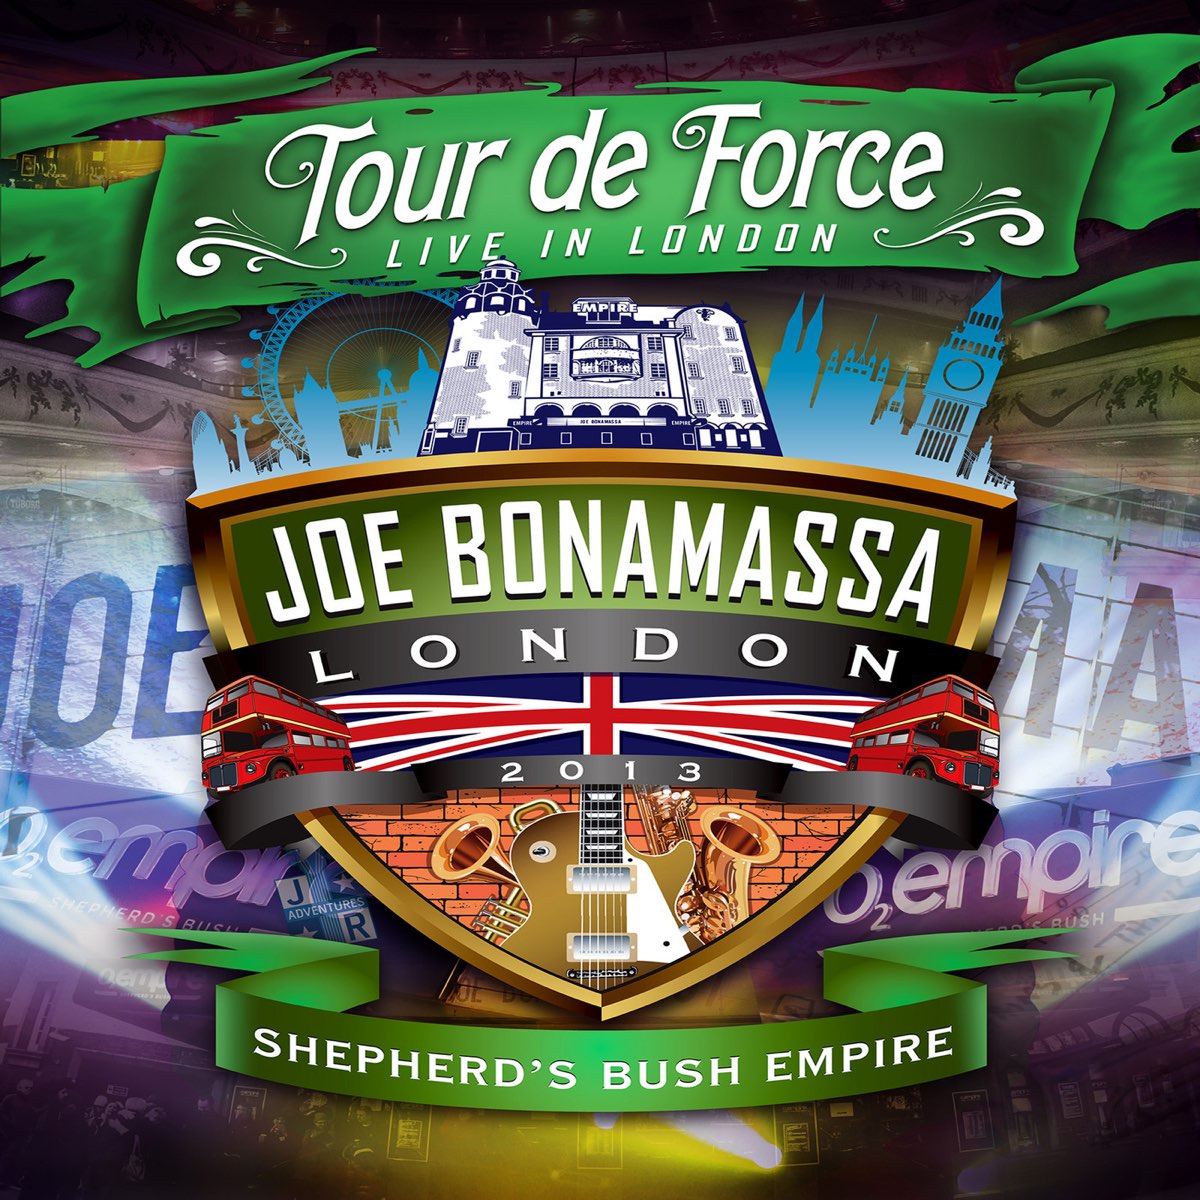 ‎Tour de Force Live In London Shepherd's Bush Empire by Joe